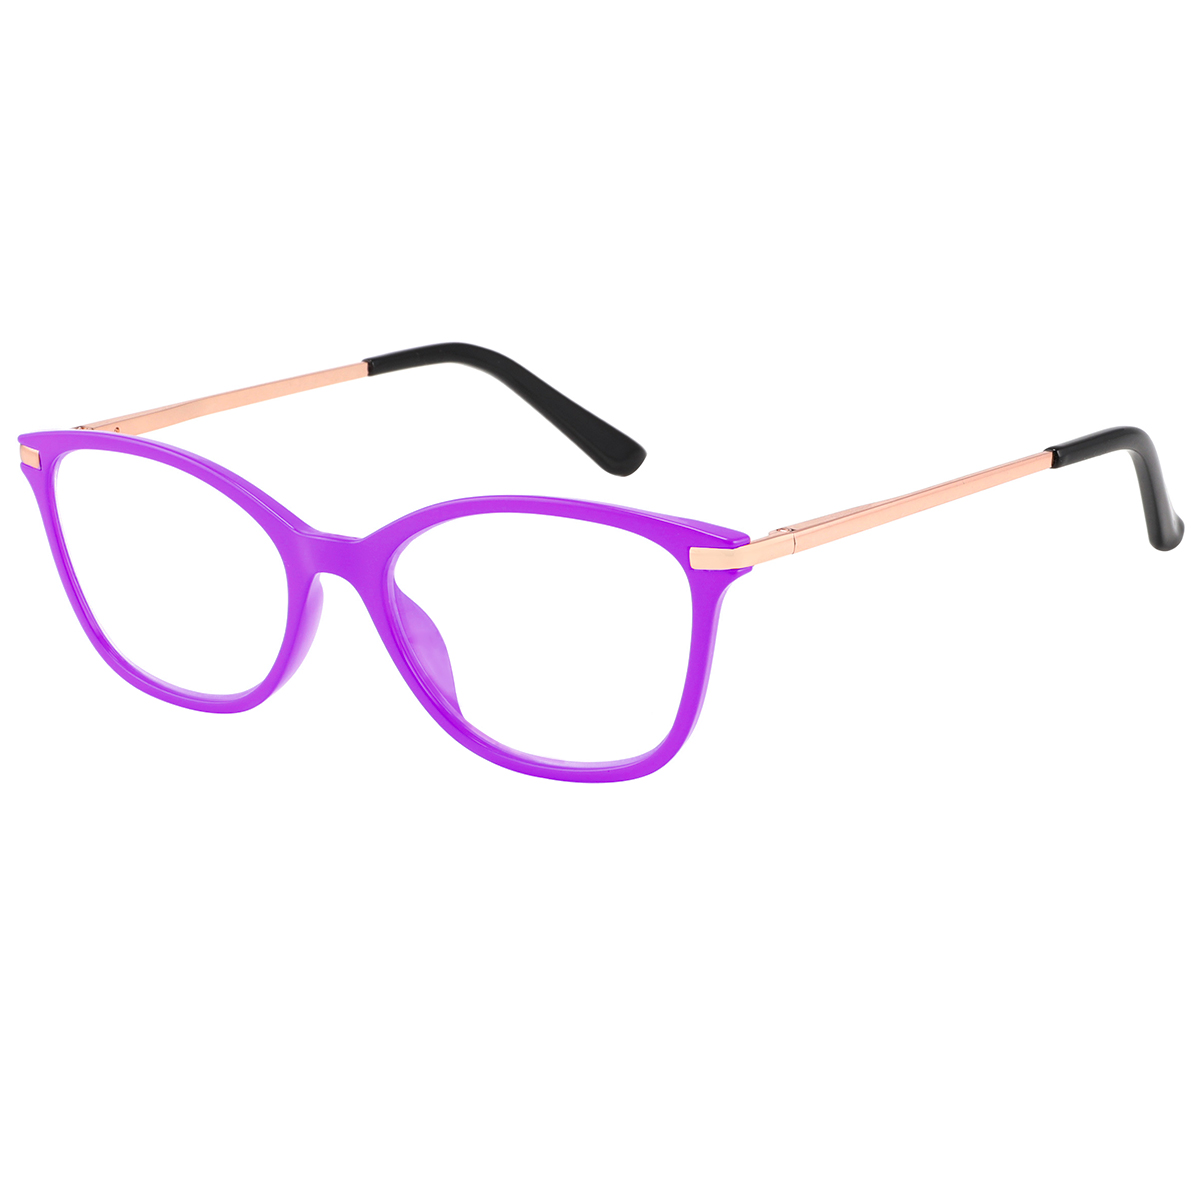 Bengal - Cat-eye Purple Reading Glasses for Women